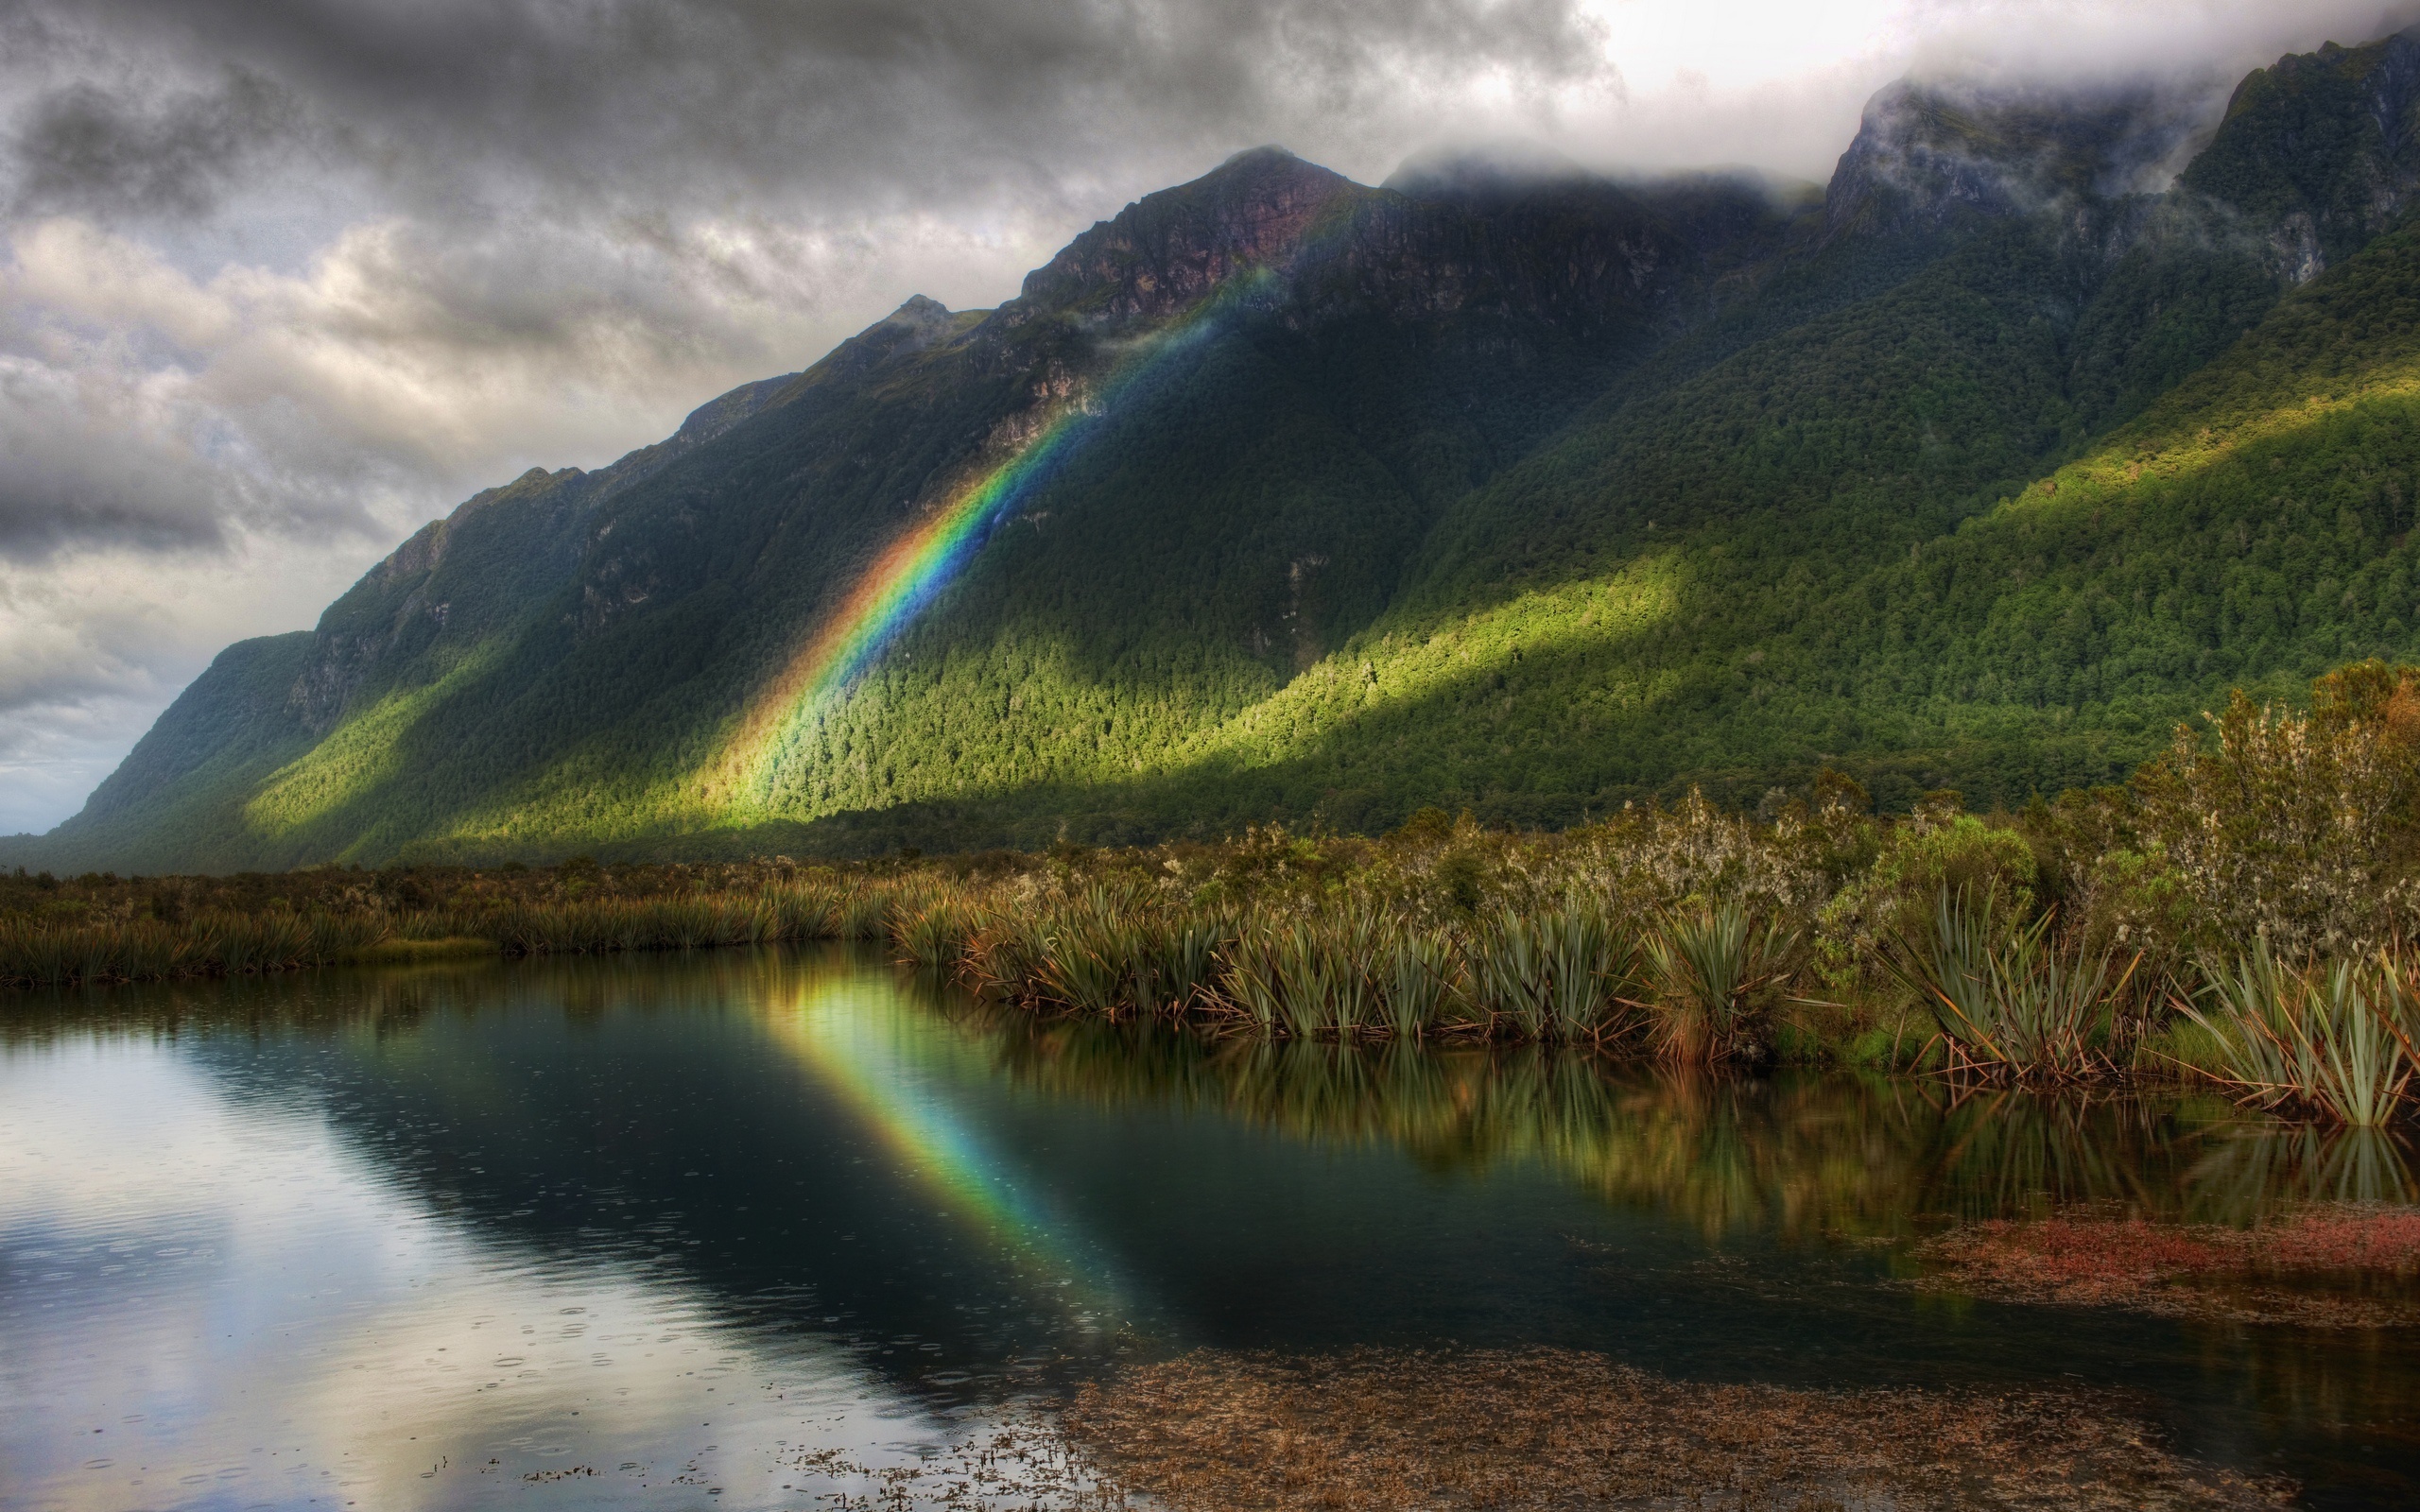 Rainbows reflect on the hills